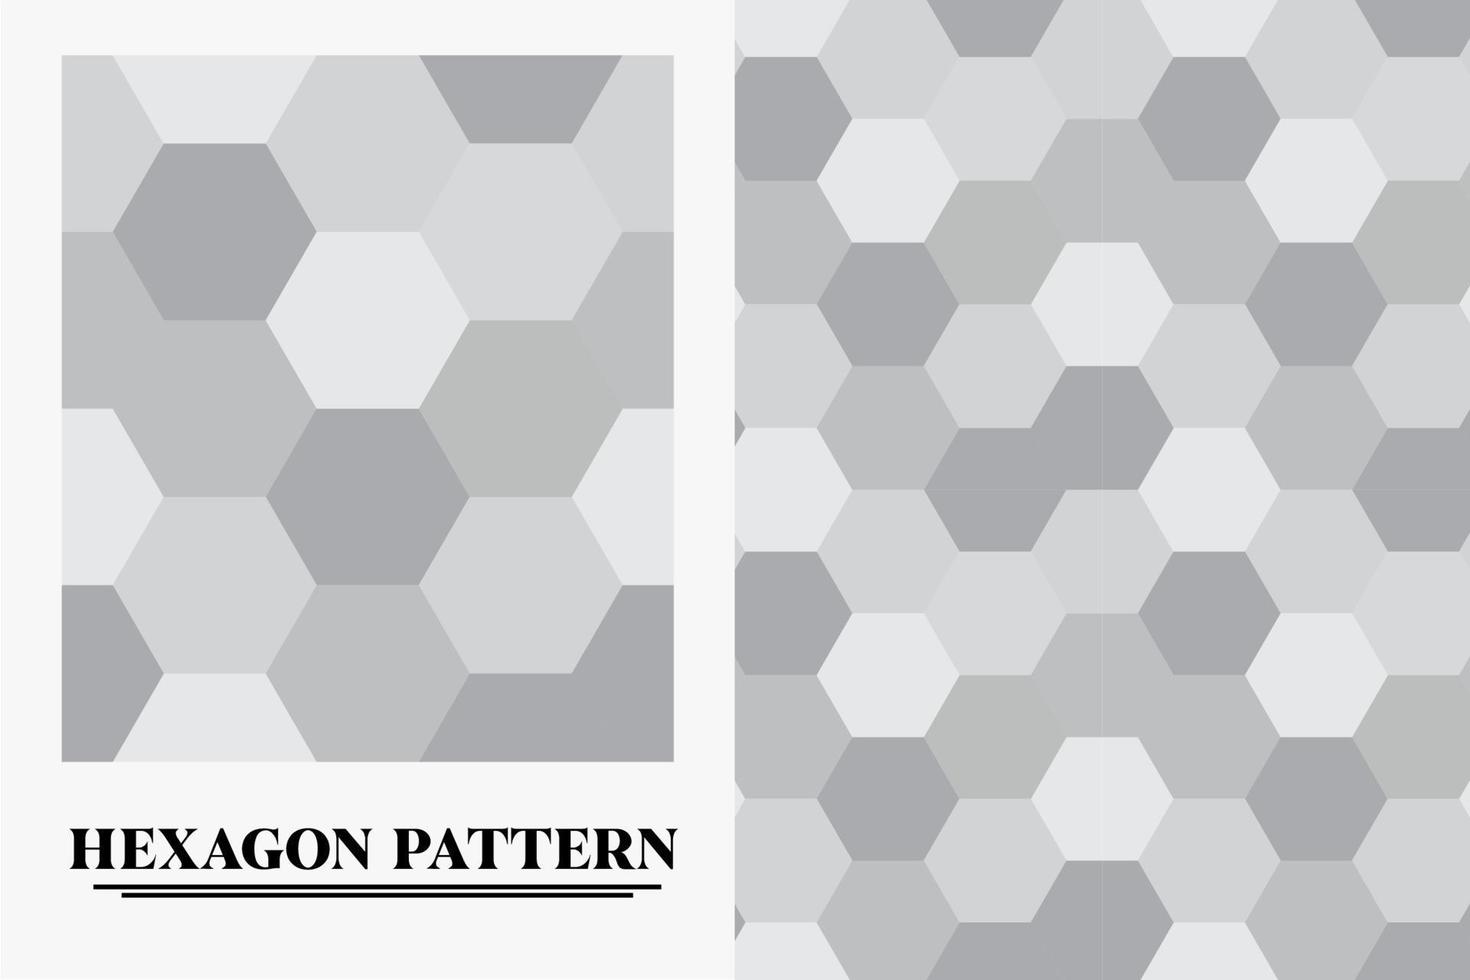 vektor av hexagonmönster. seamles mönster med hexagoner. hexagon fri vektor